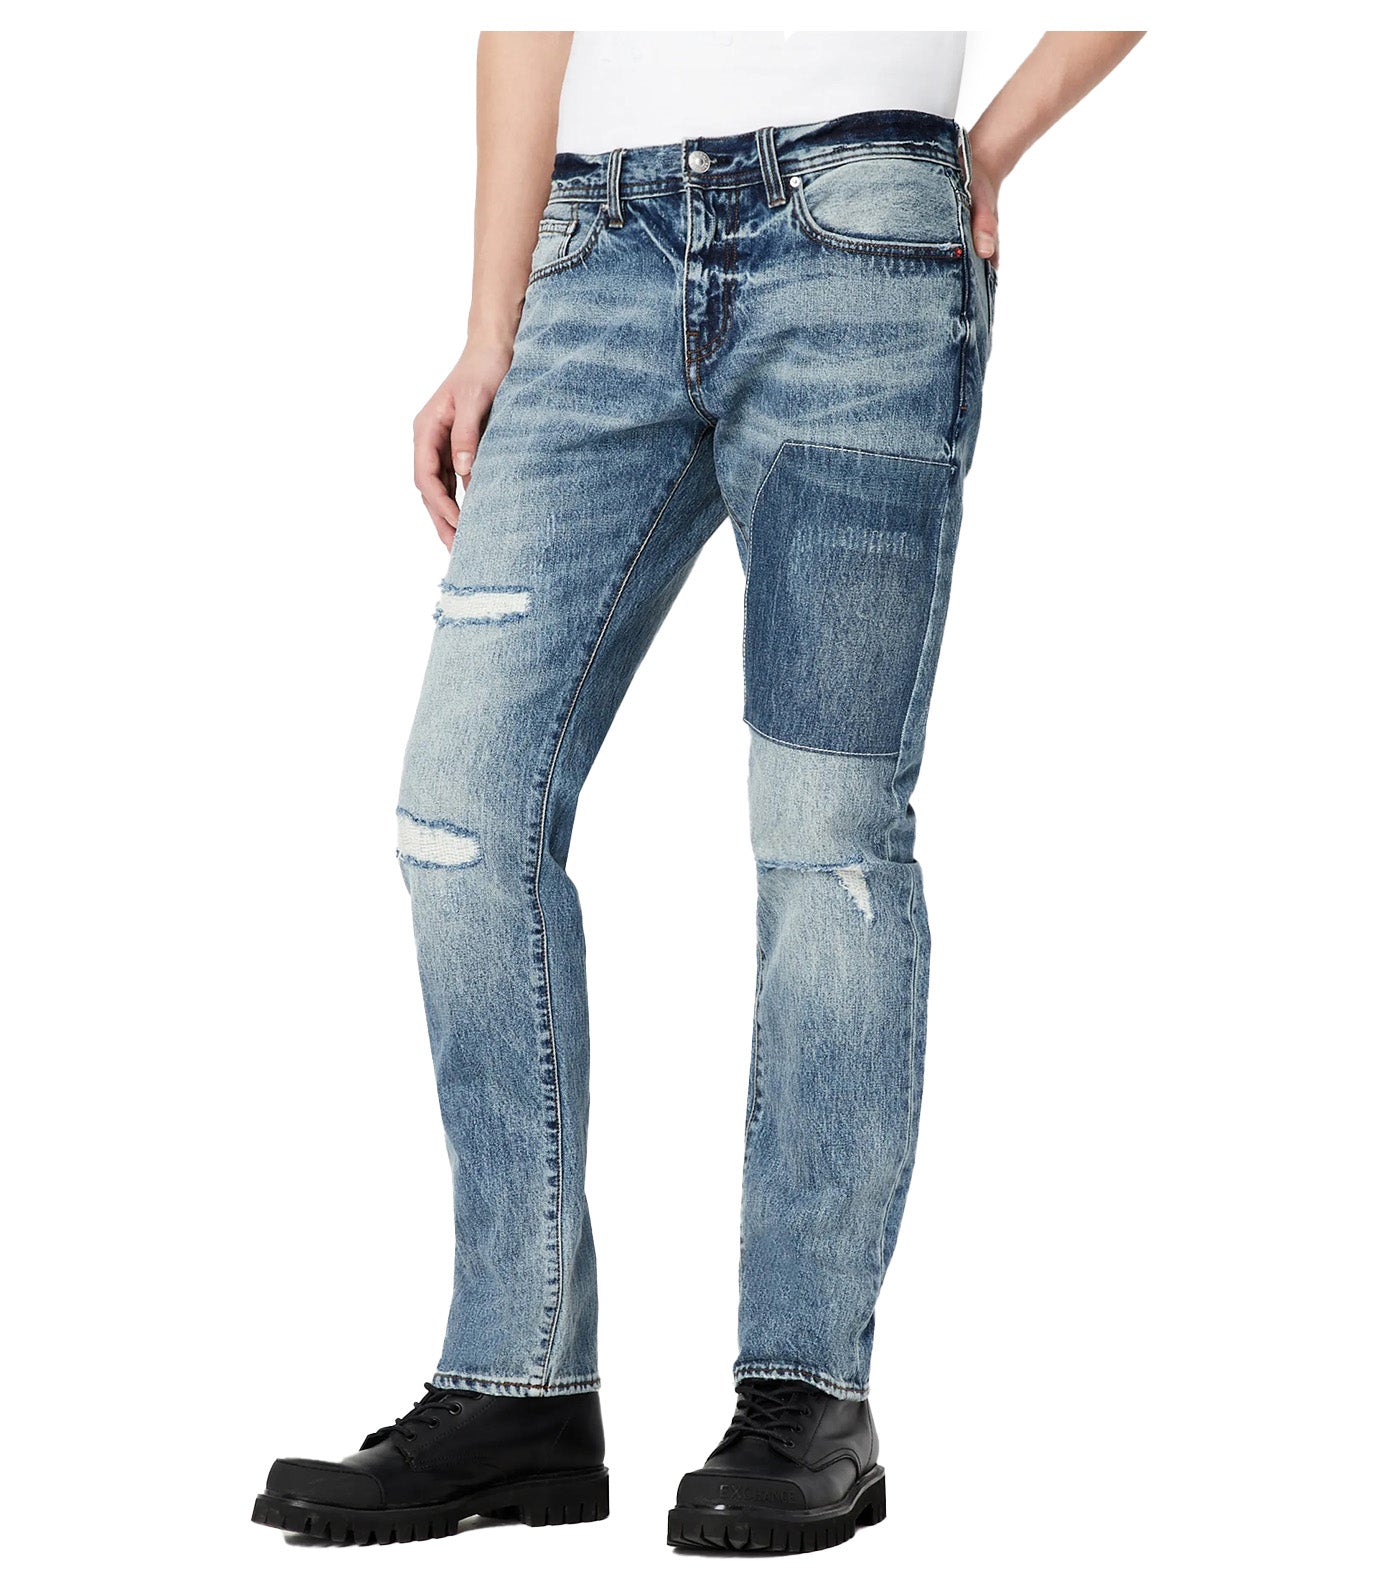 J13 Slim Fit Cotton Denim Jeans